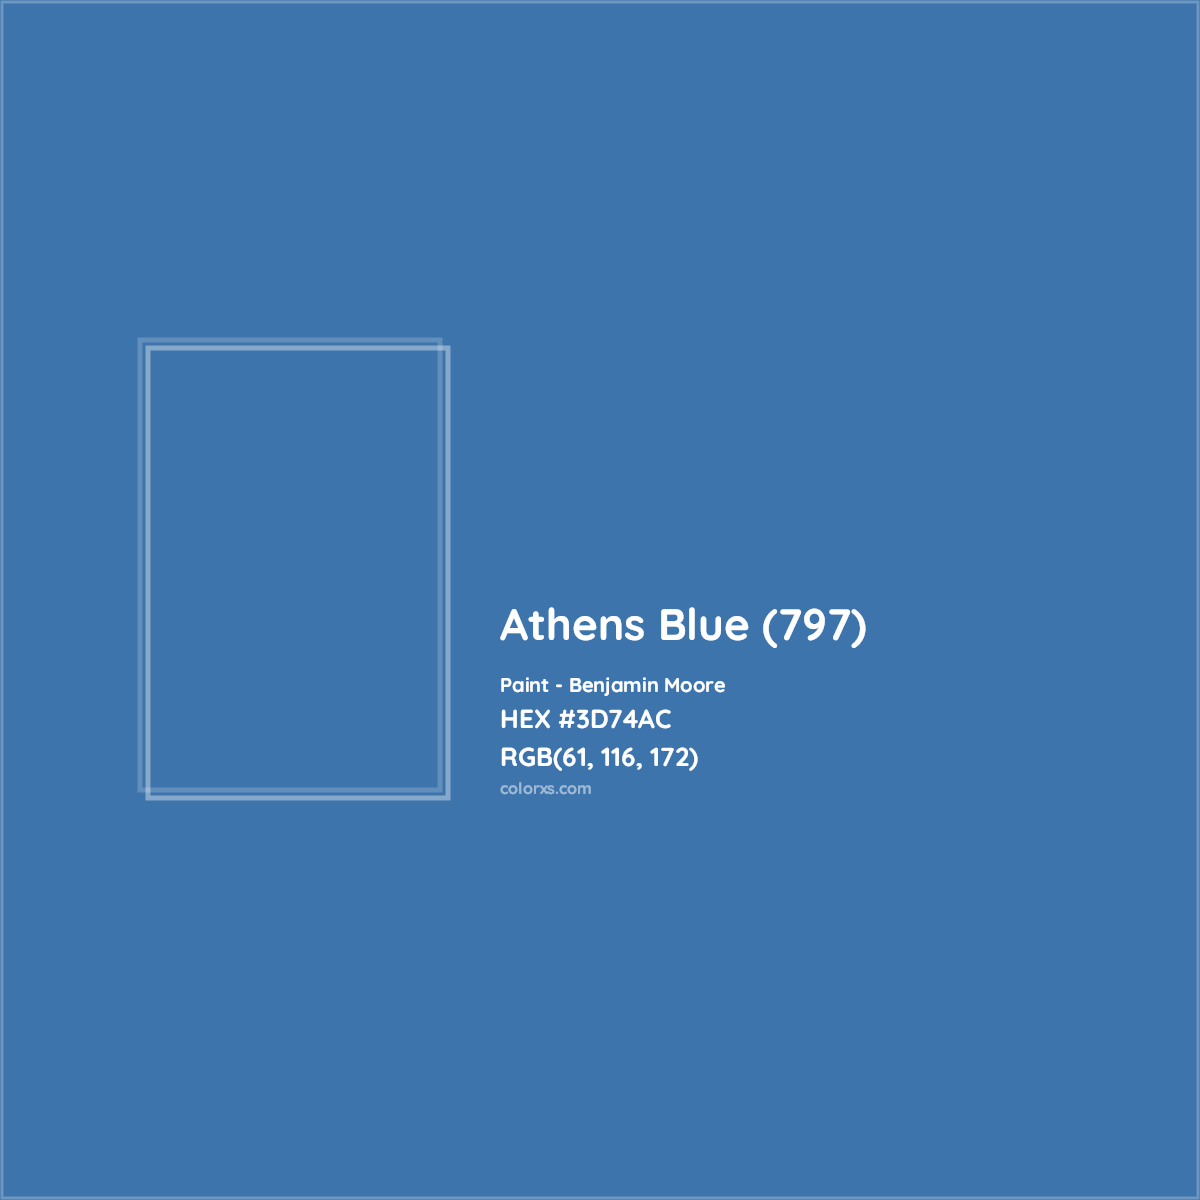 HEX #3D74AC Athens Blue (797) Paint Benjamin Moore - Color Code